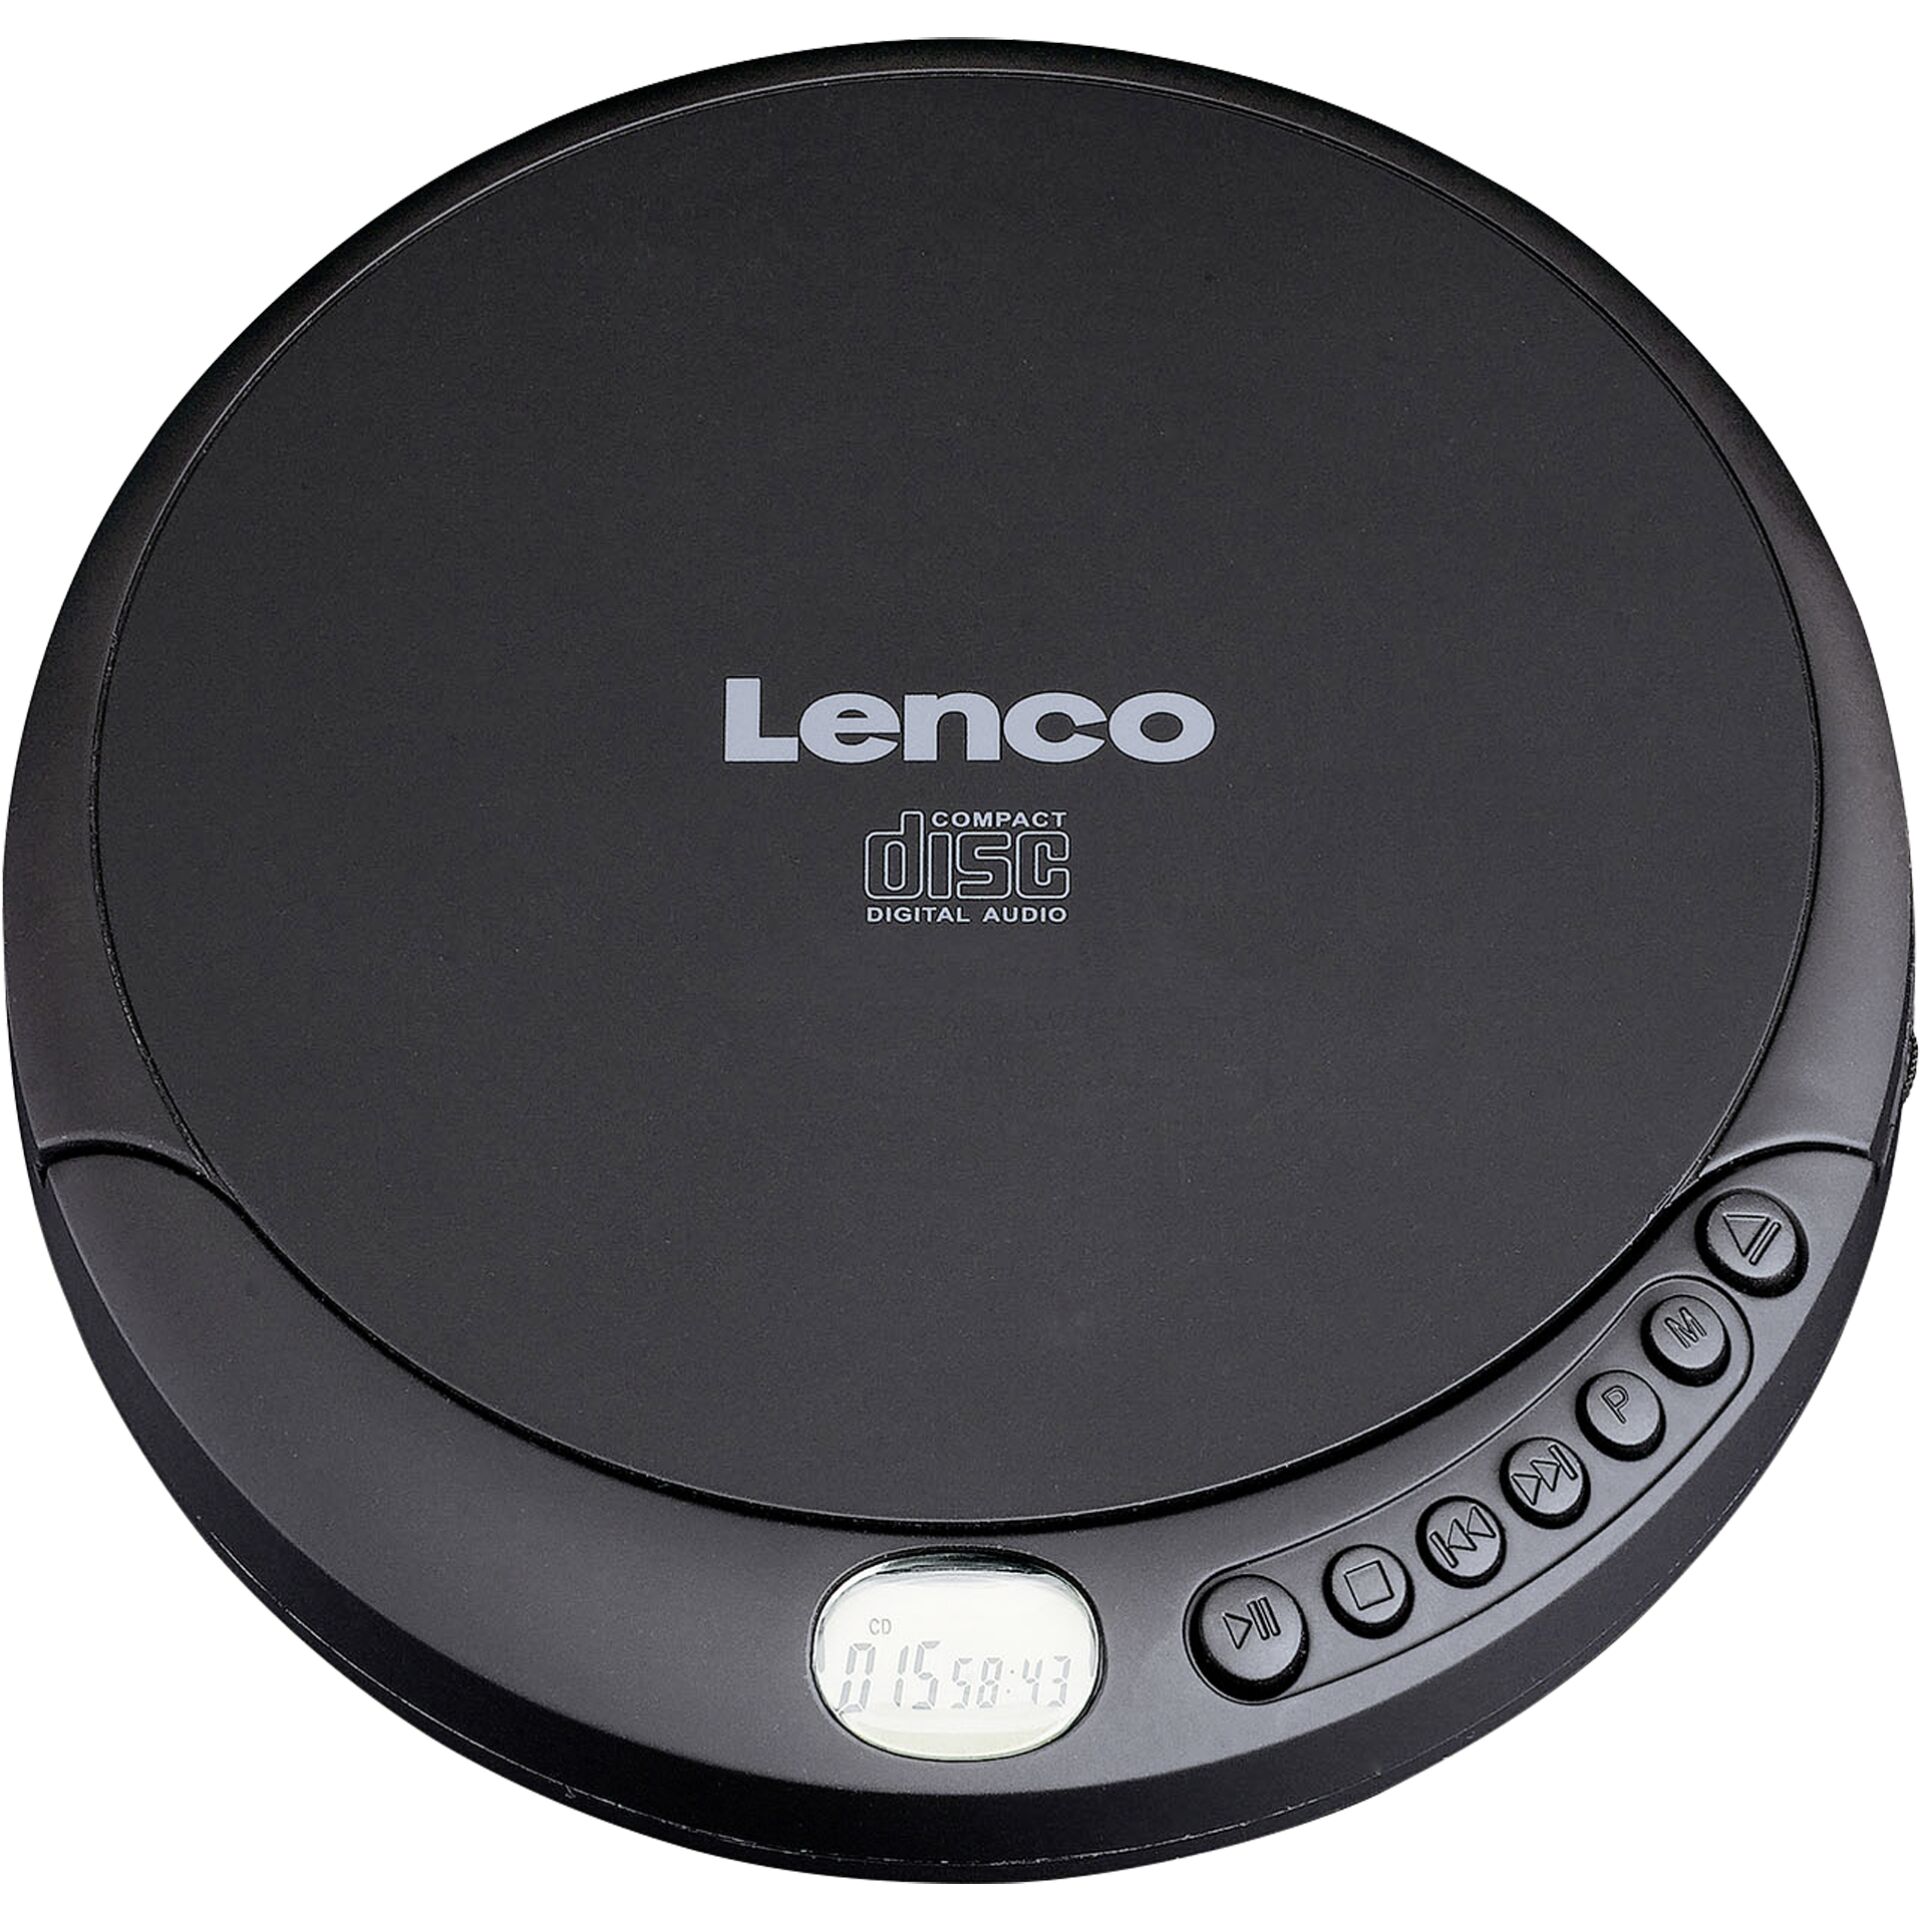 Lenco CD-010 CD-Player Tragbarer CD-Player Schwarz